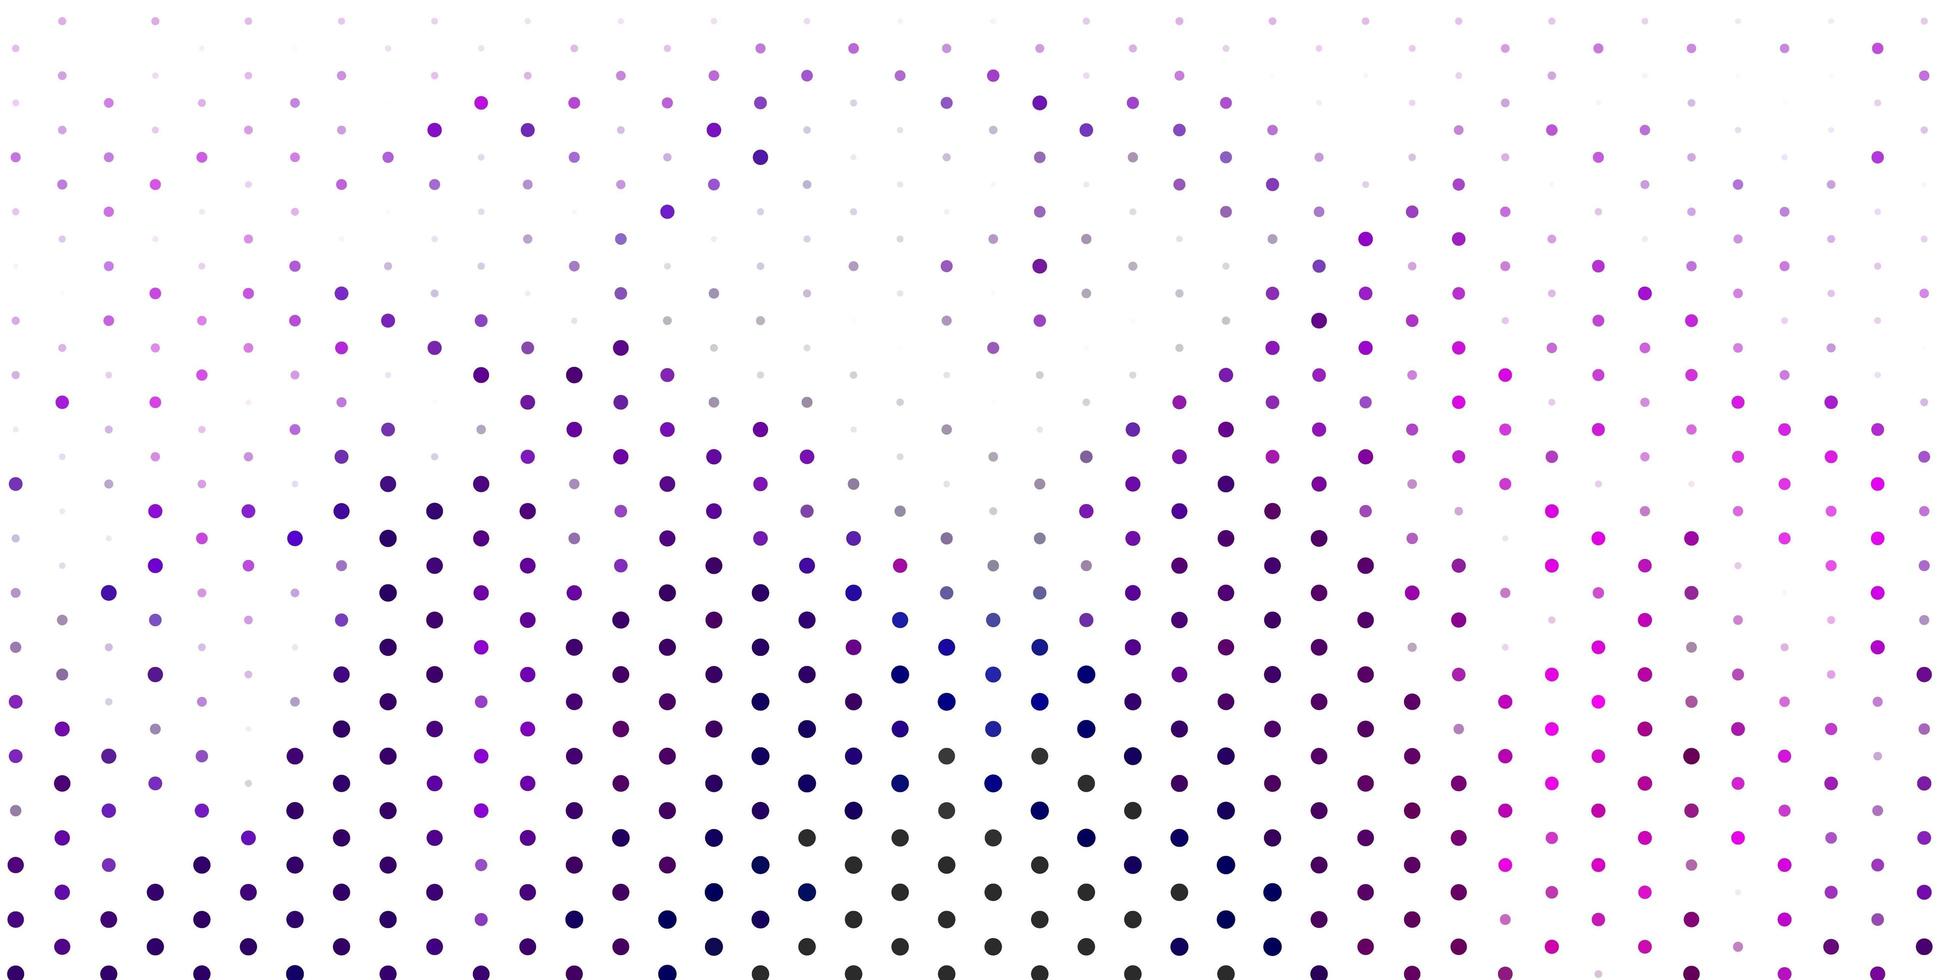 diseño de vector púrpura claro con formas circulares